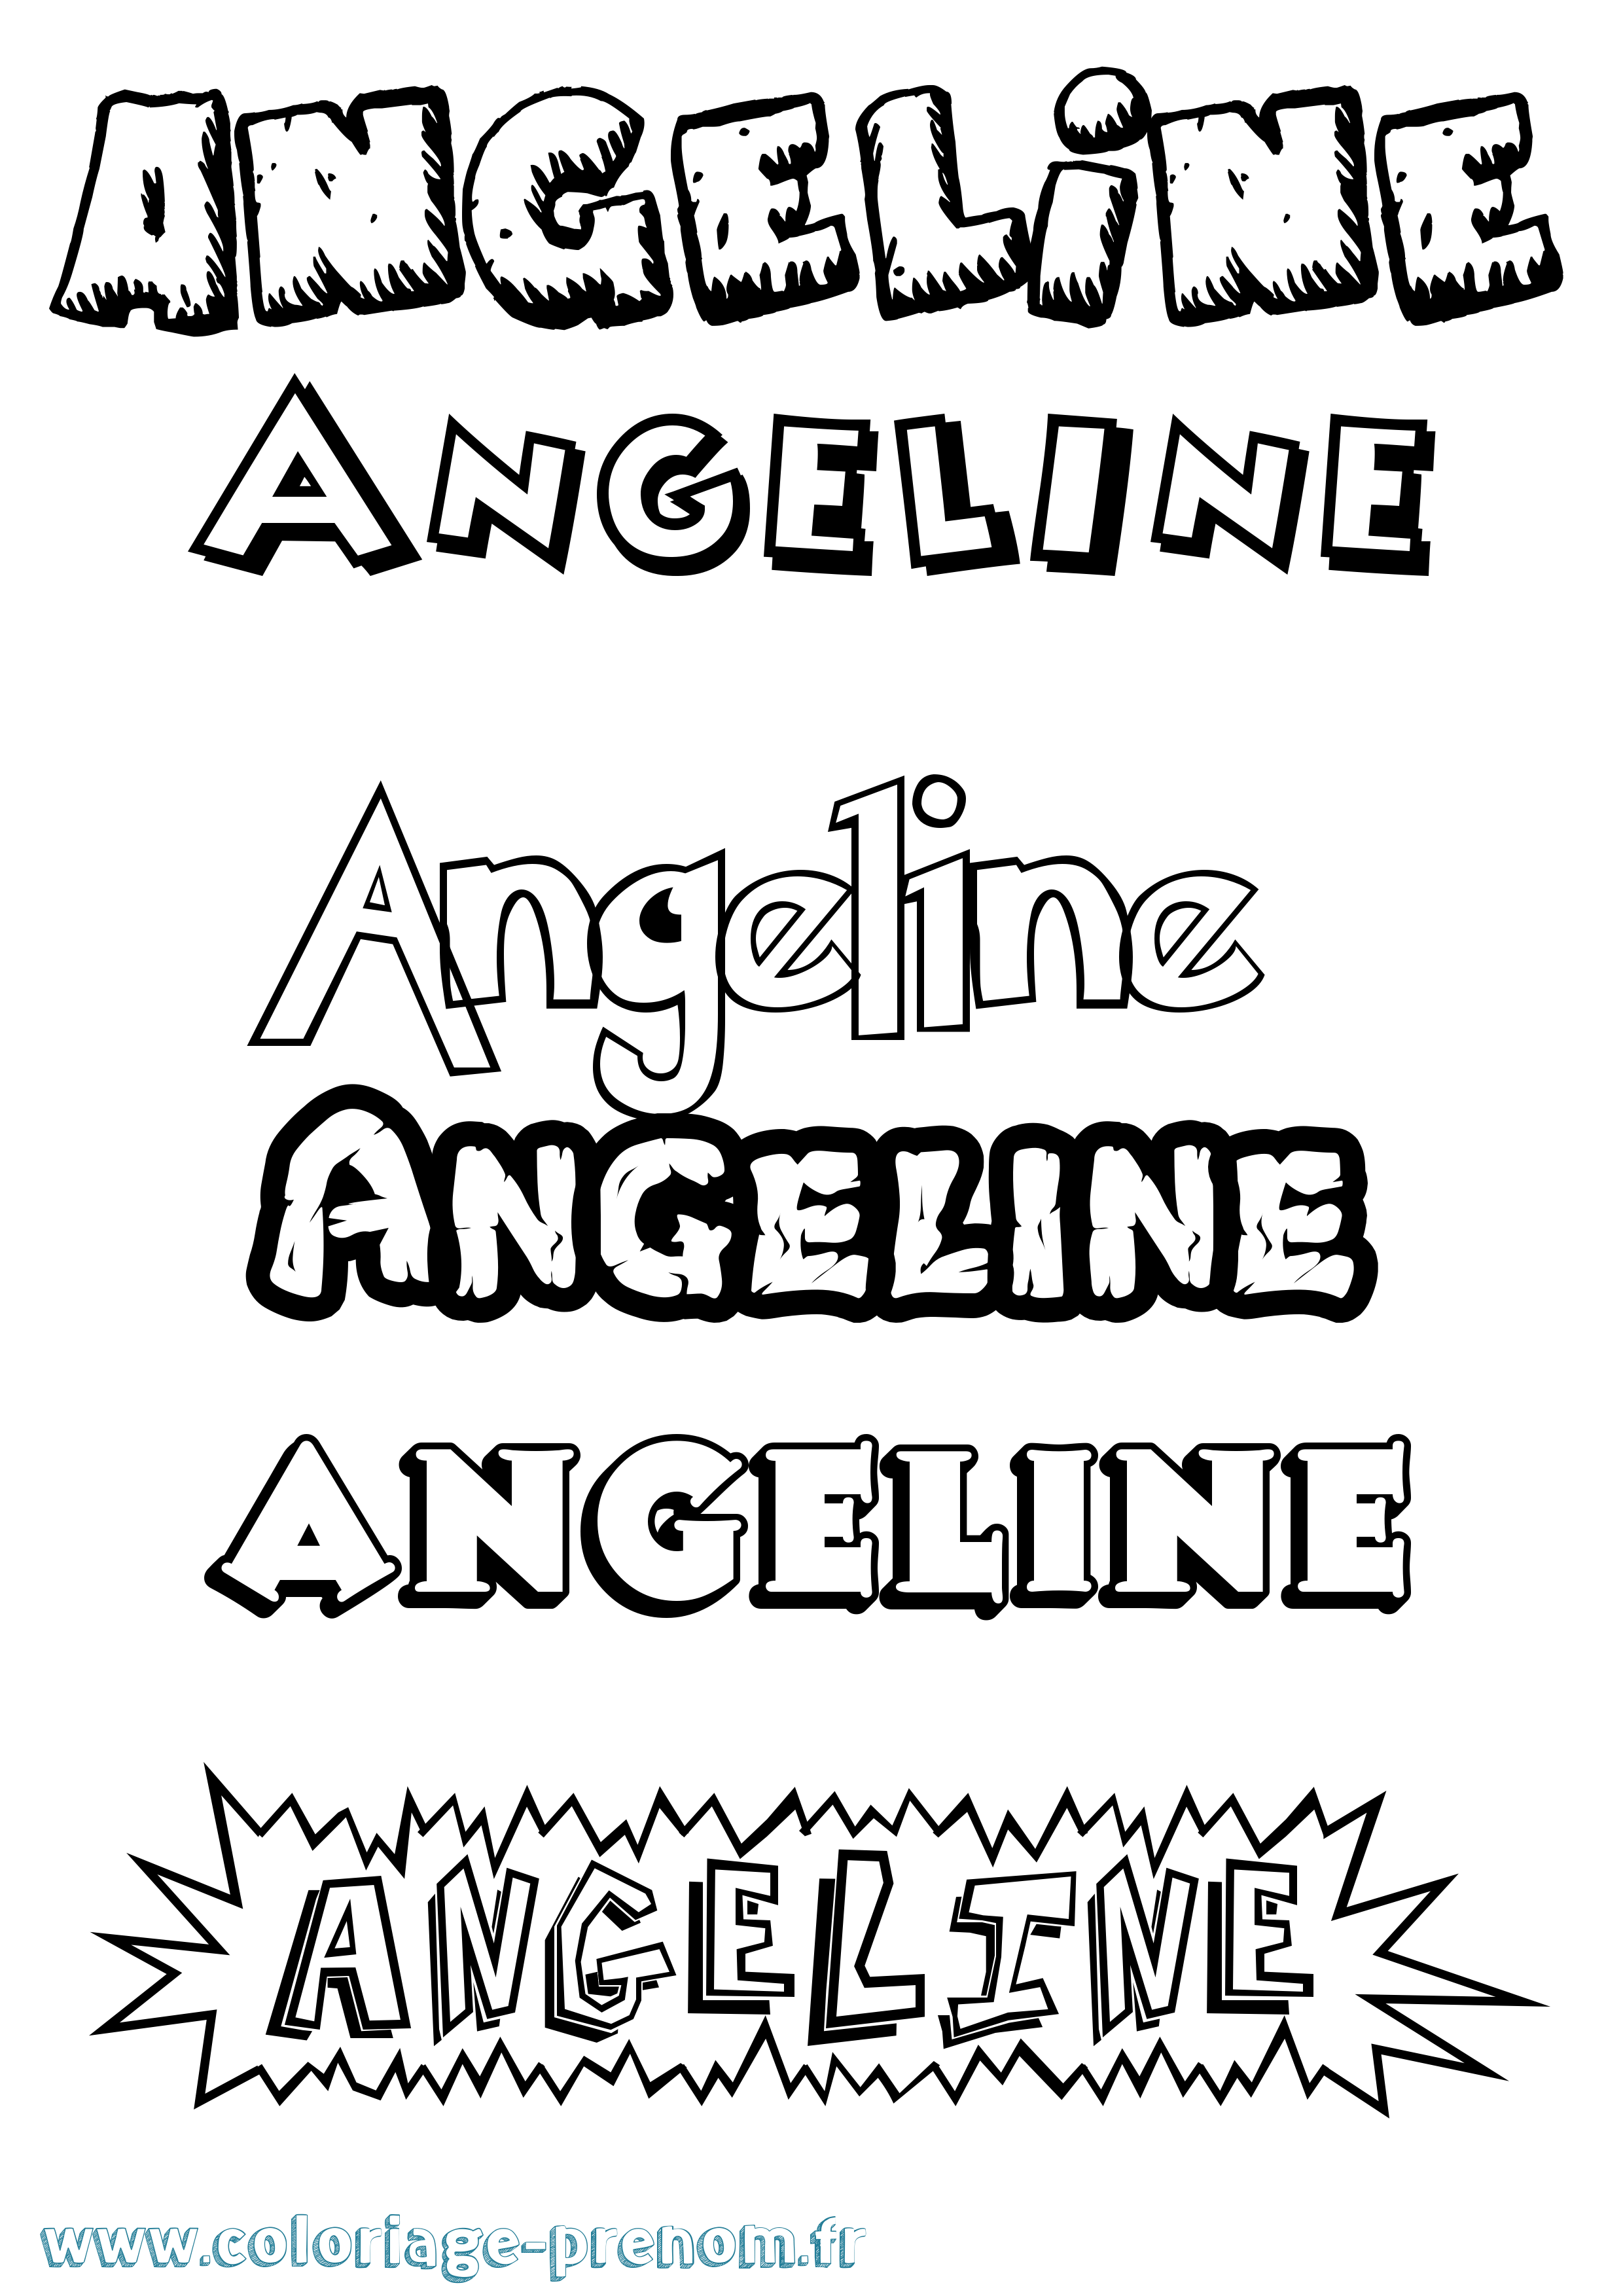 Coloriage prénom Angeline